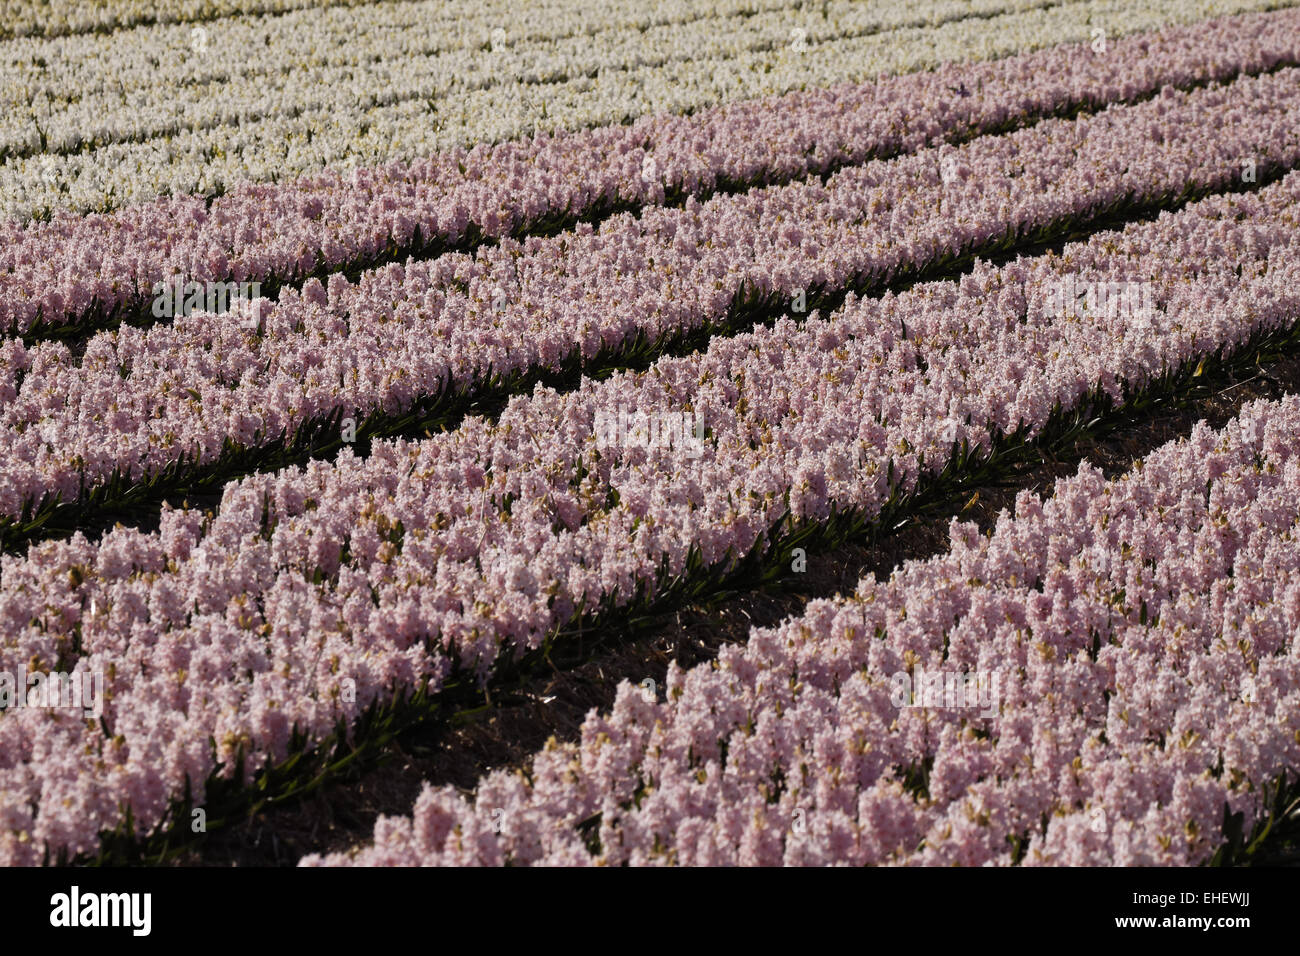 Flower field with garden hyacinths Stock Photo